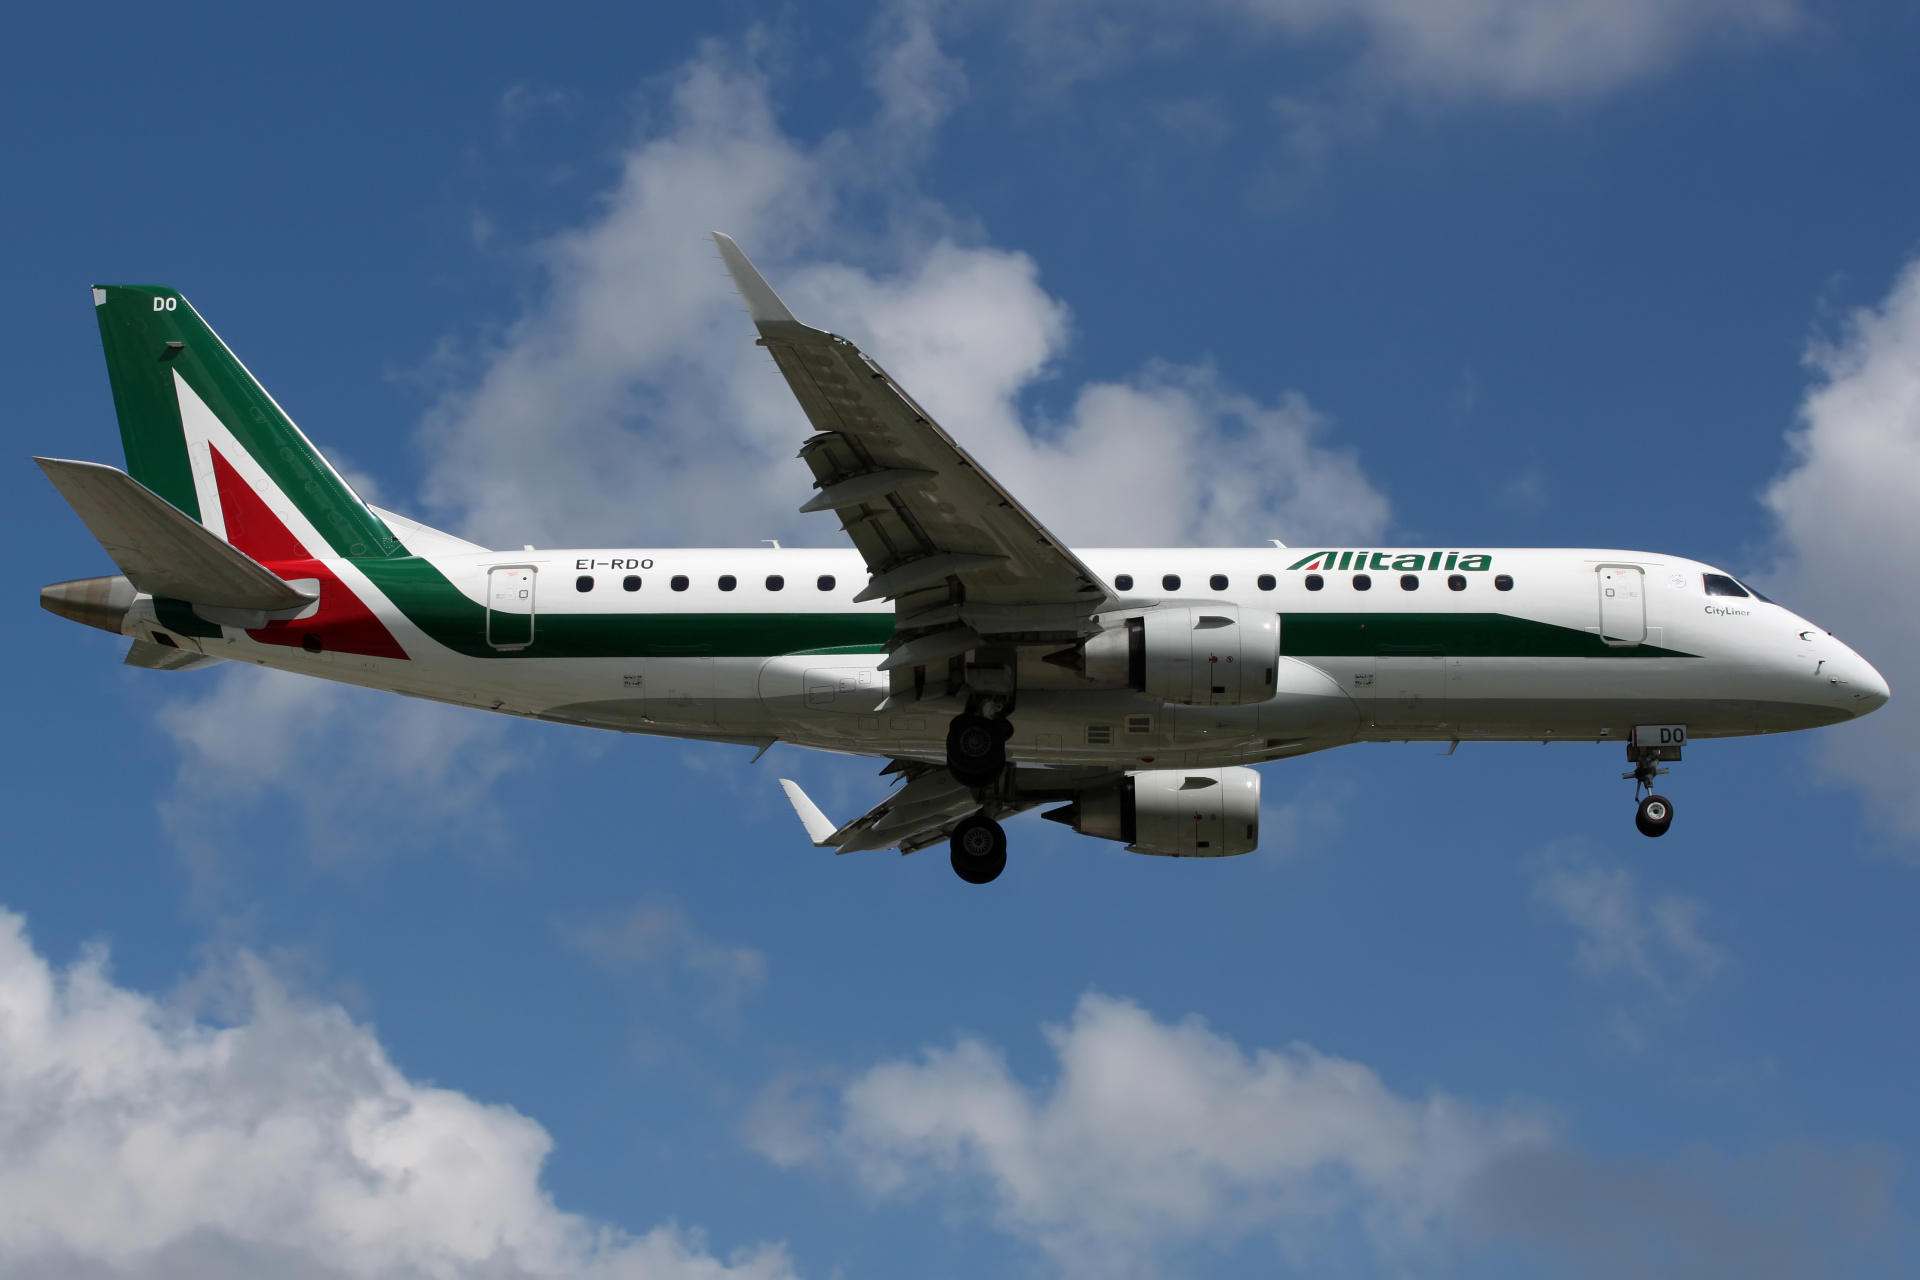 EI-RDO, Alitalia CityLiner (Aircraft » EPWA Spotting » Embraer E175)